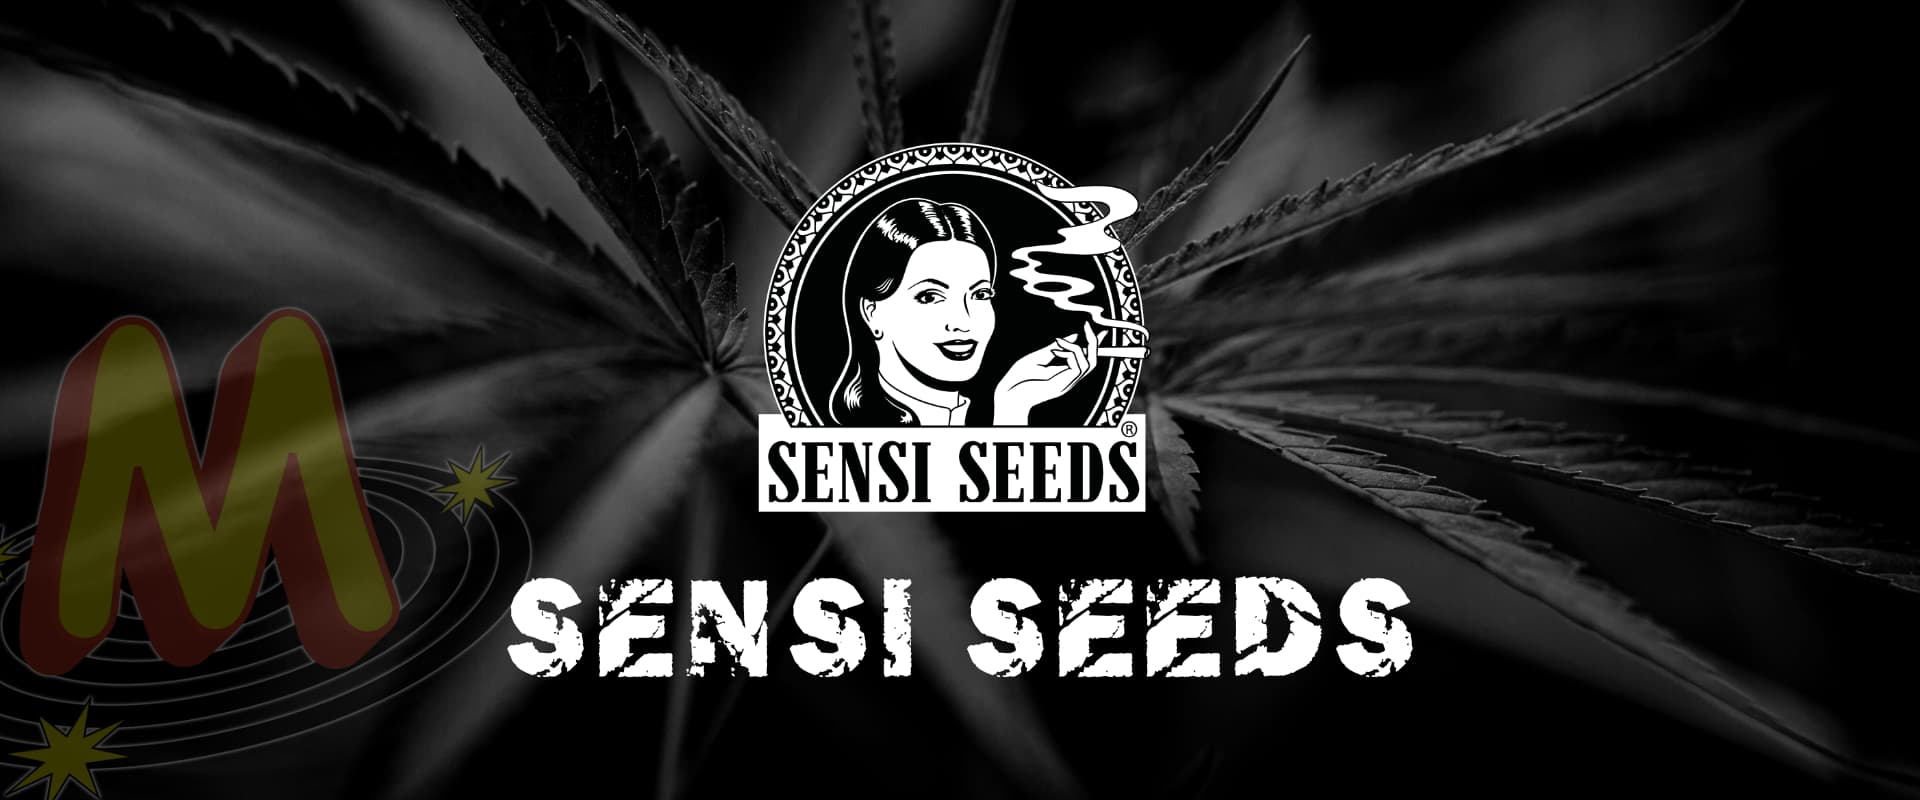 sensi_seeds_banner_seeds